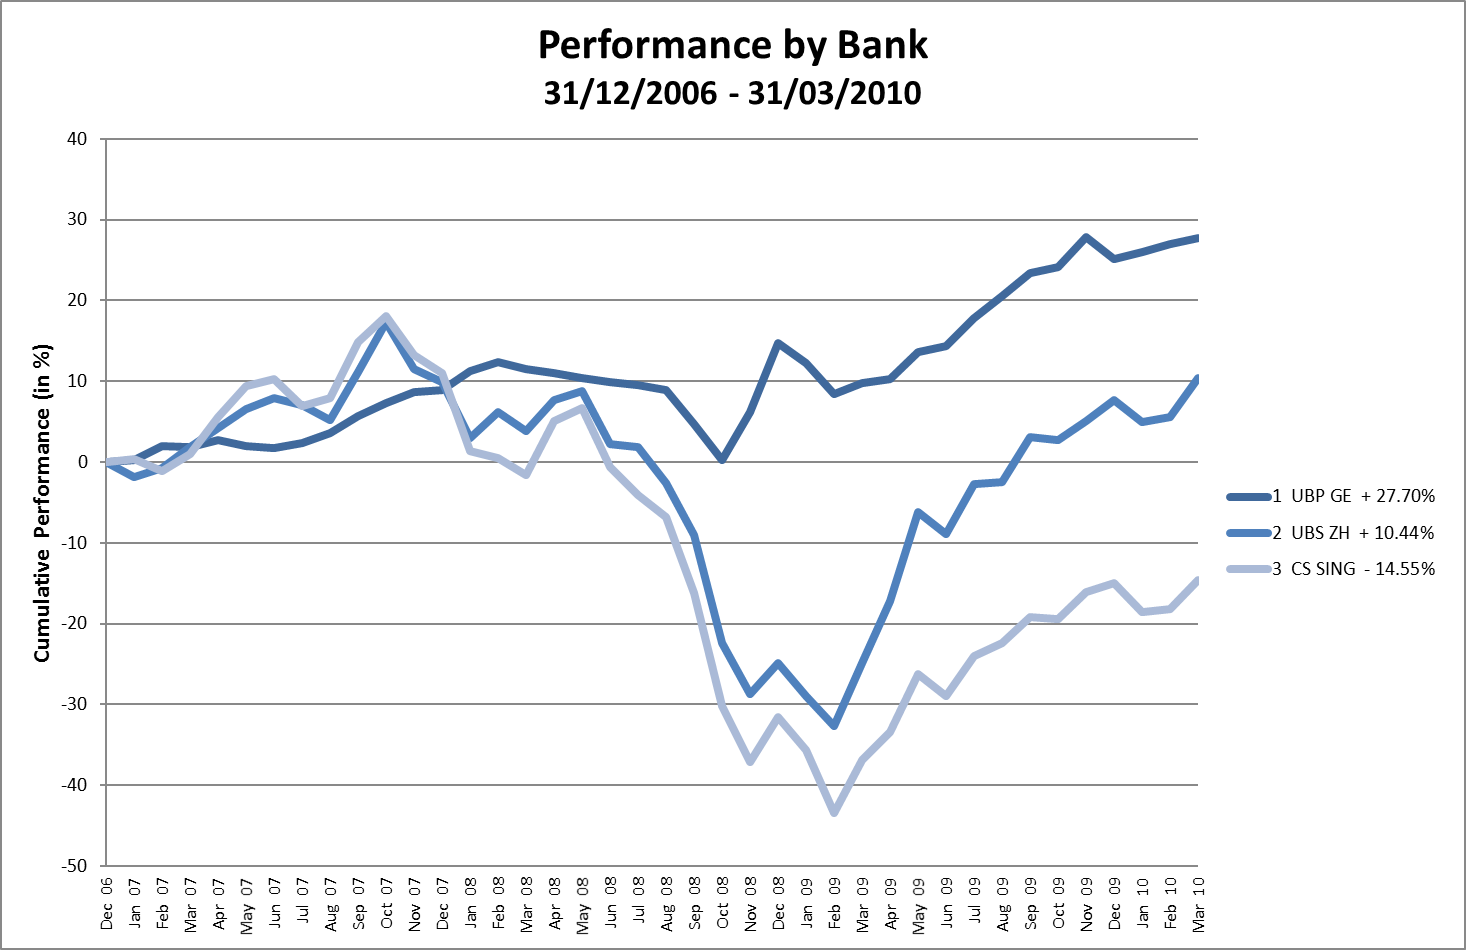 Banks, Cumulative Performance in %